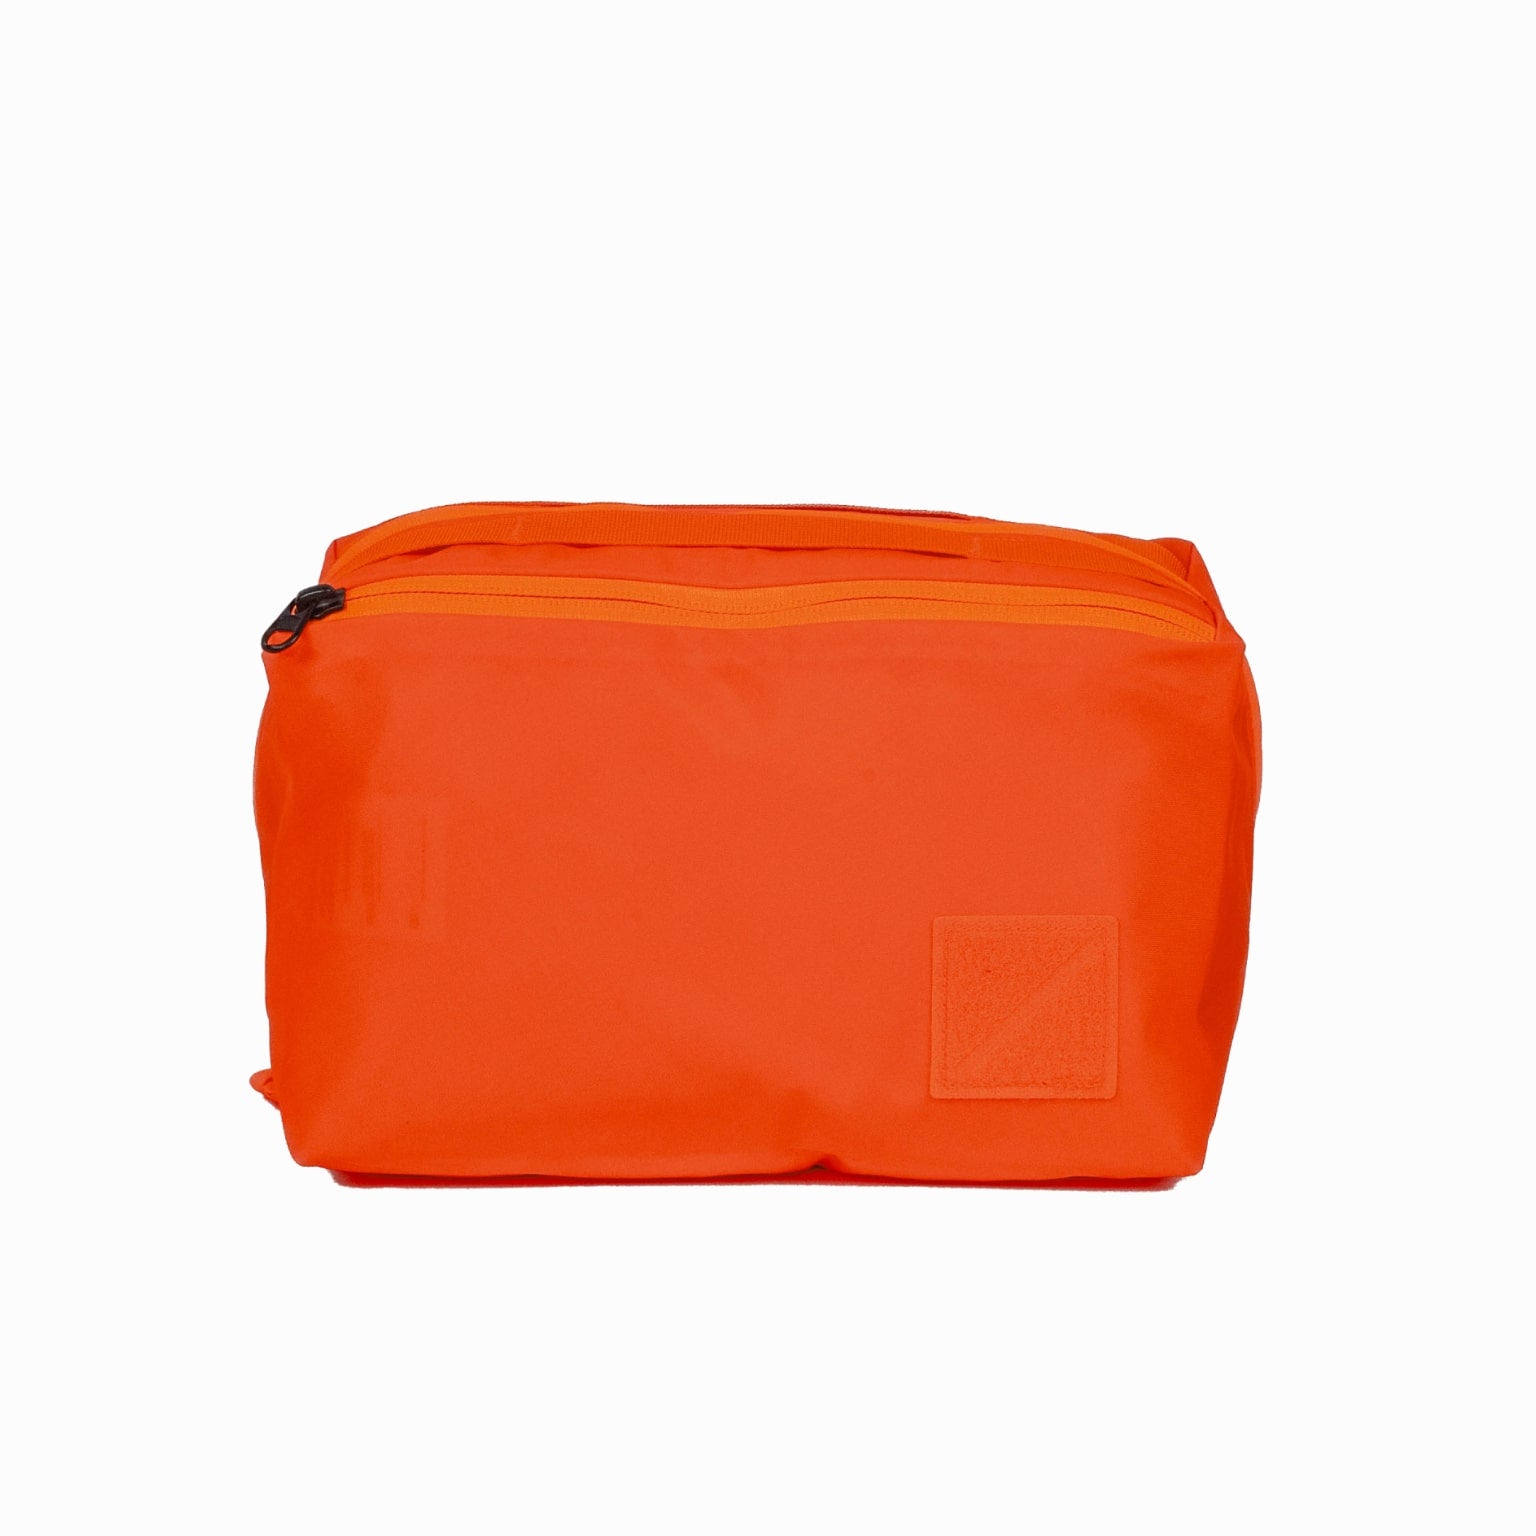 Transit Packing Cube 8L in Hot Orange